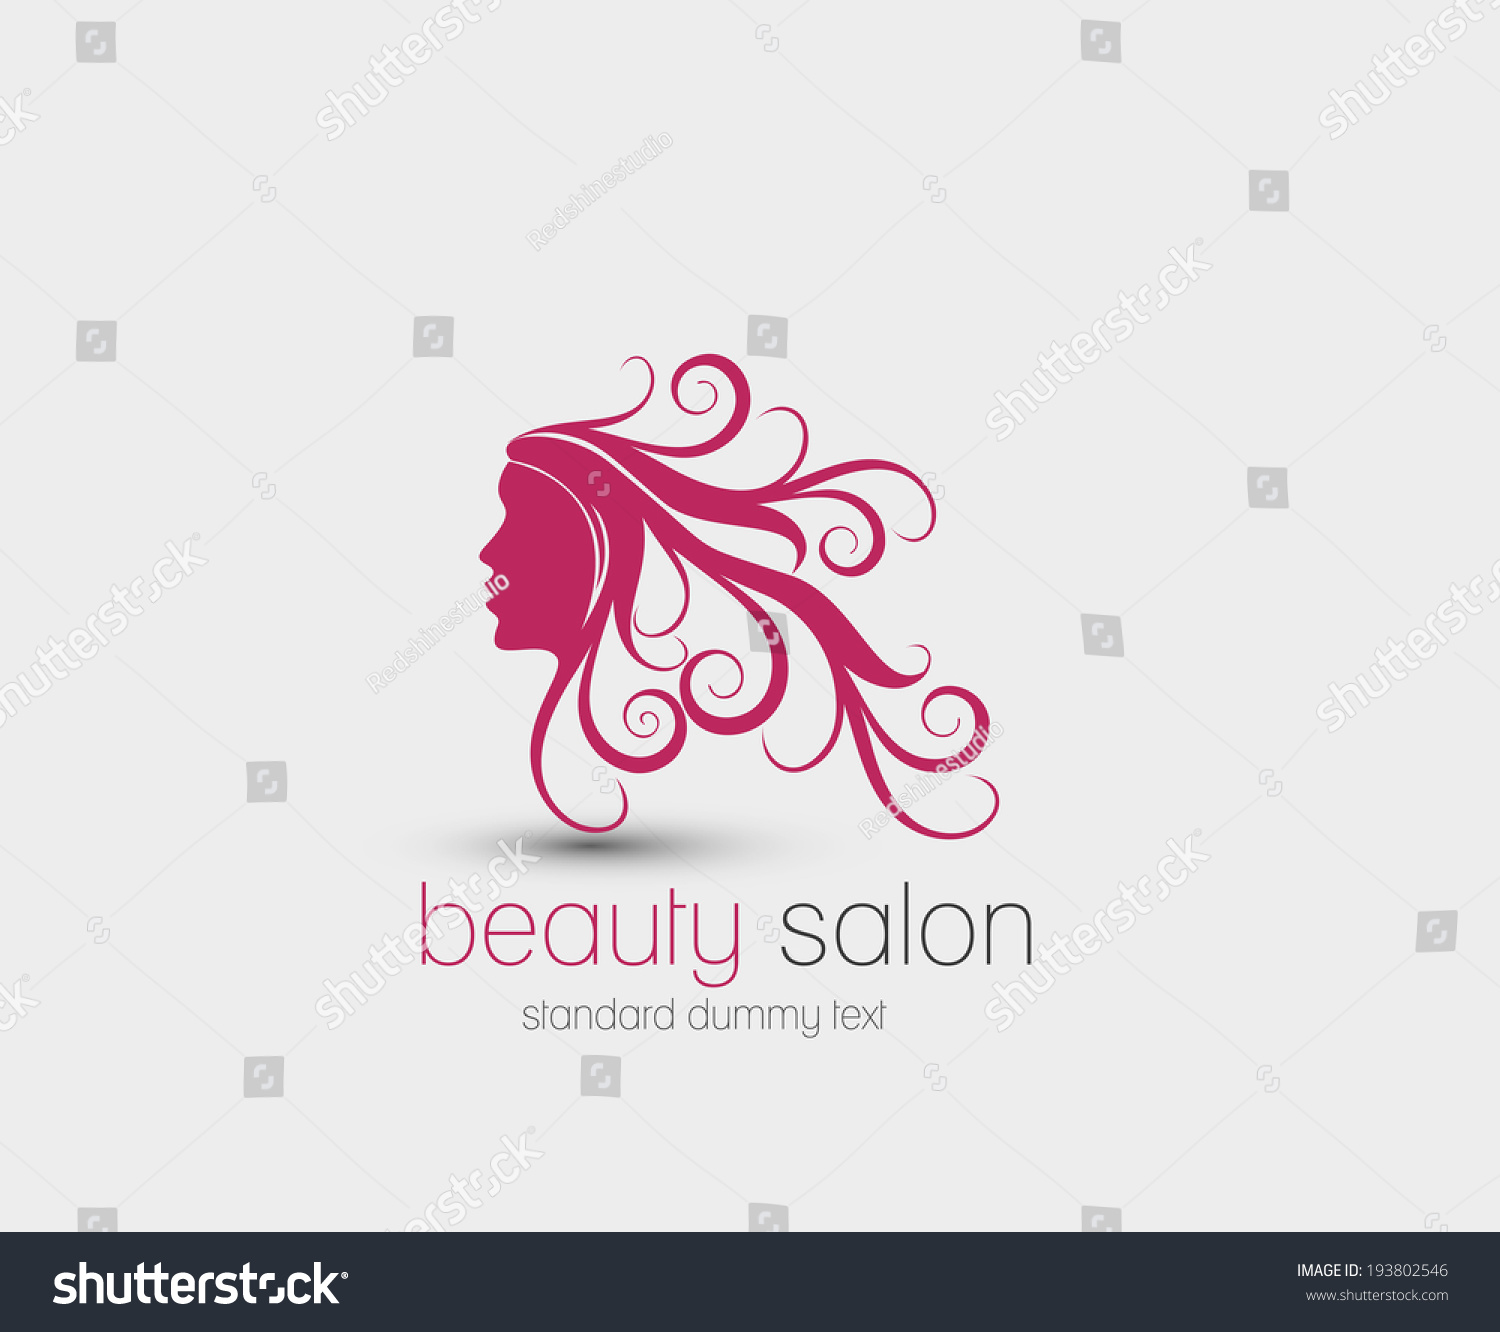 Symbol Of Beauty Salon, Isolated Vector Design - 193802546 : Shutterstock